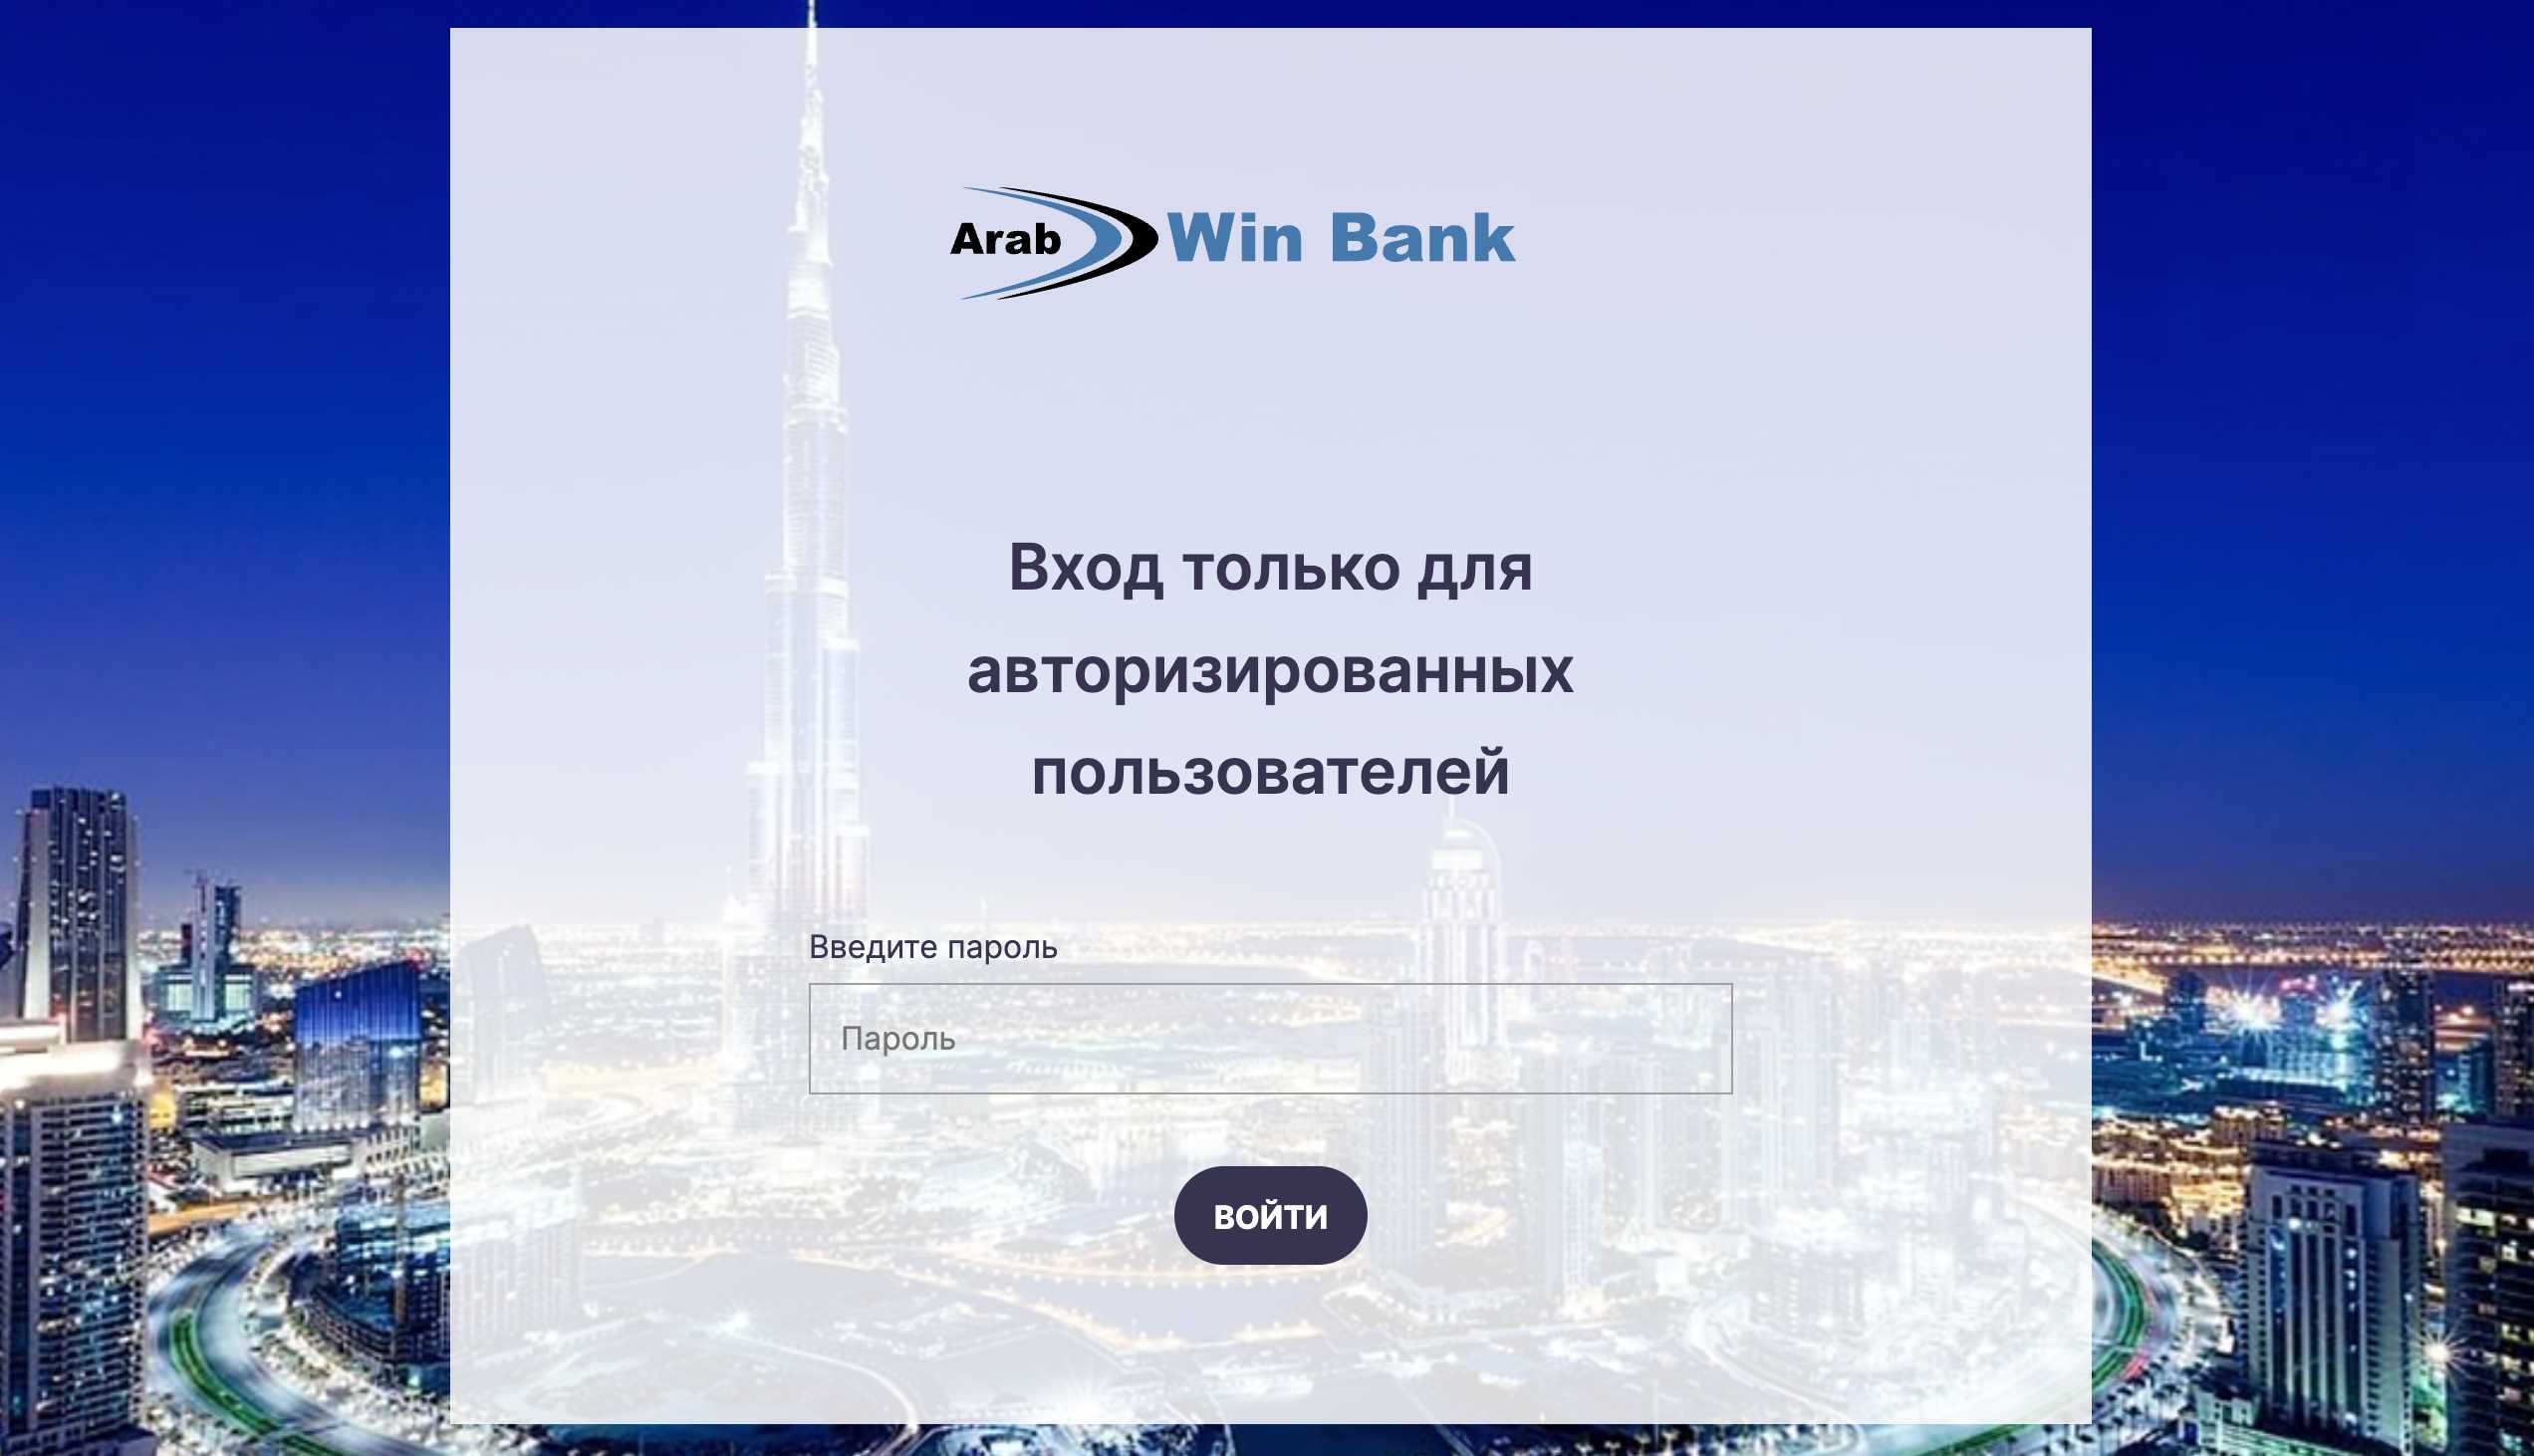 Arab Win Bank 